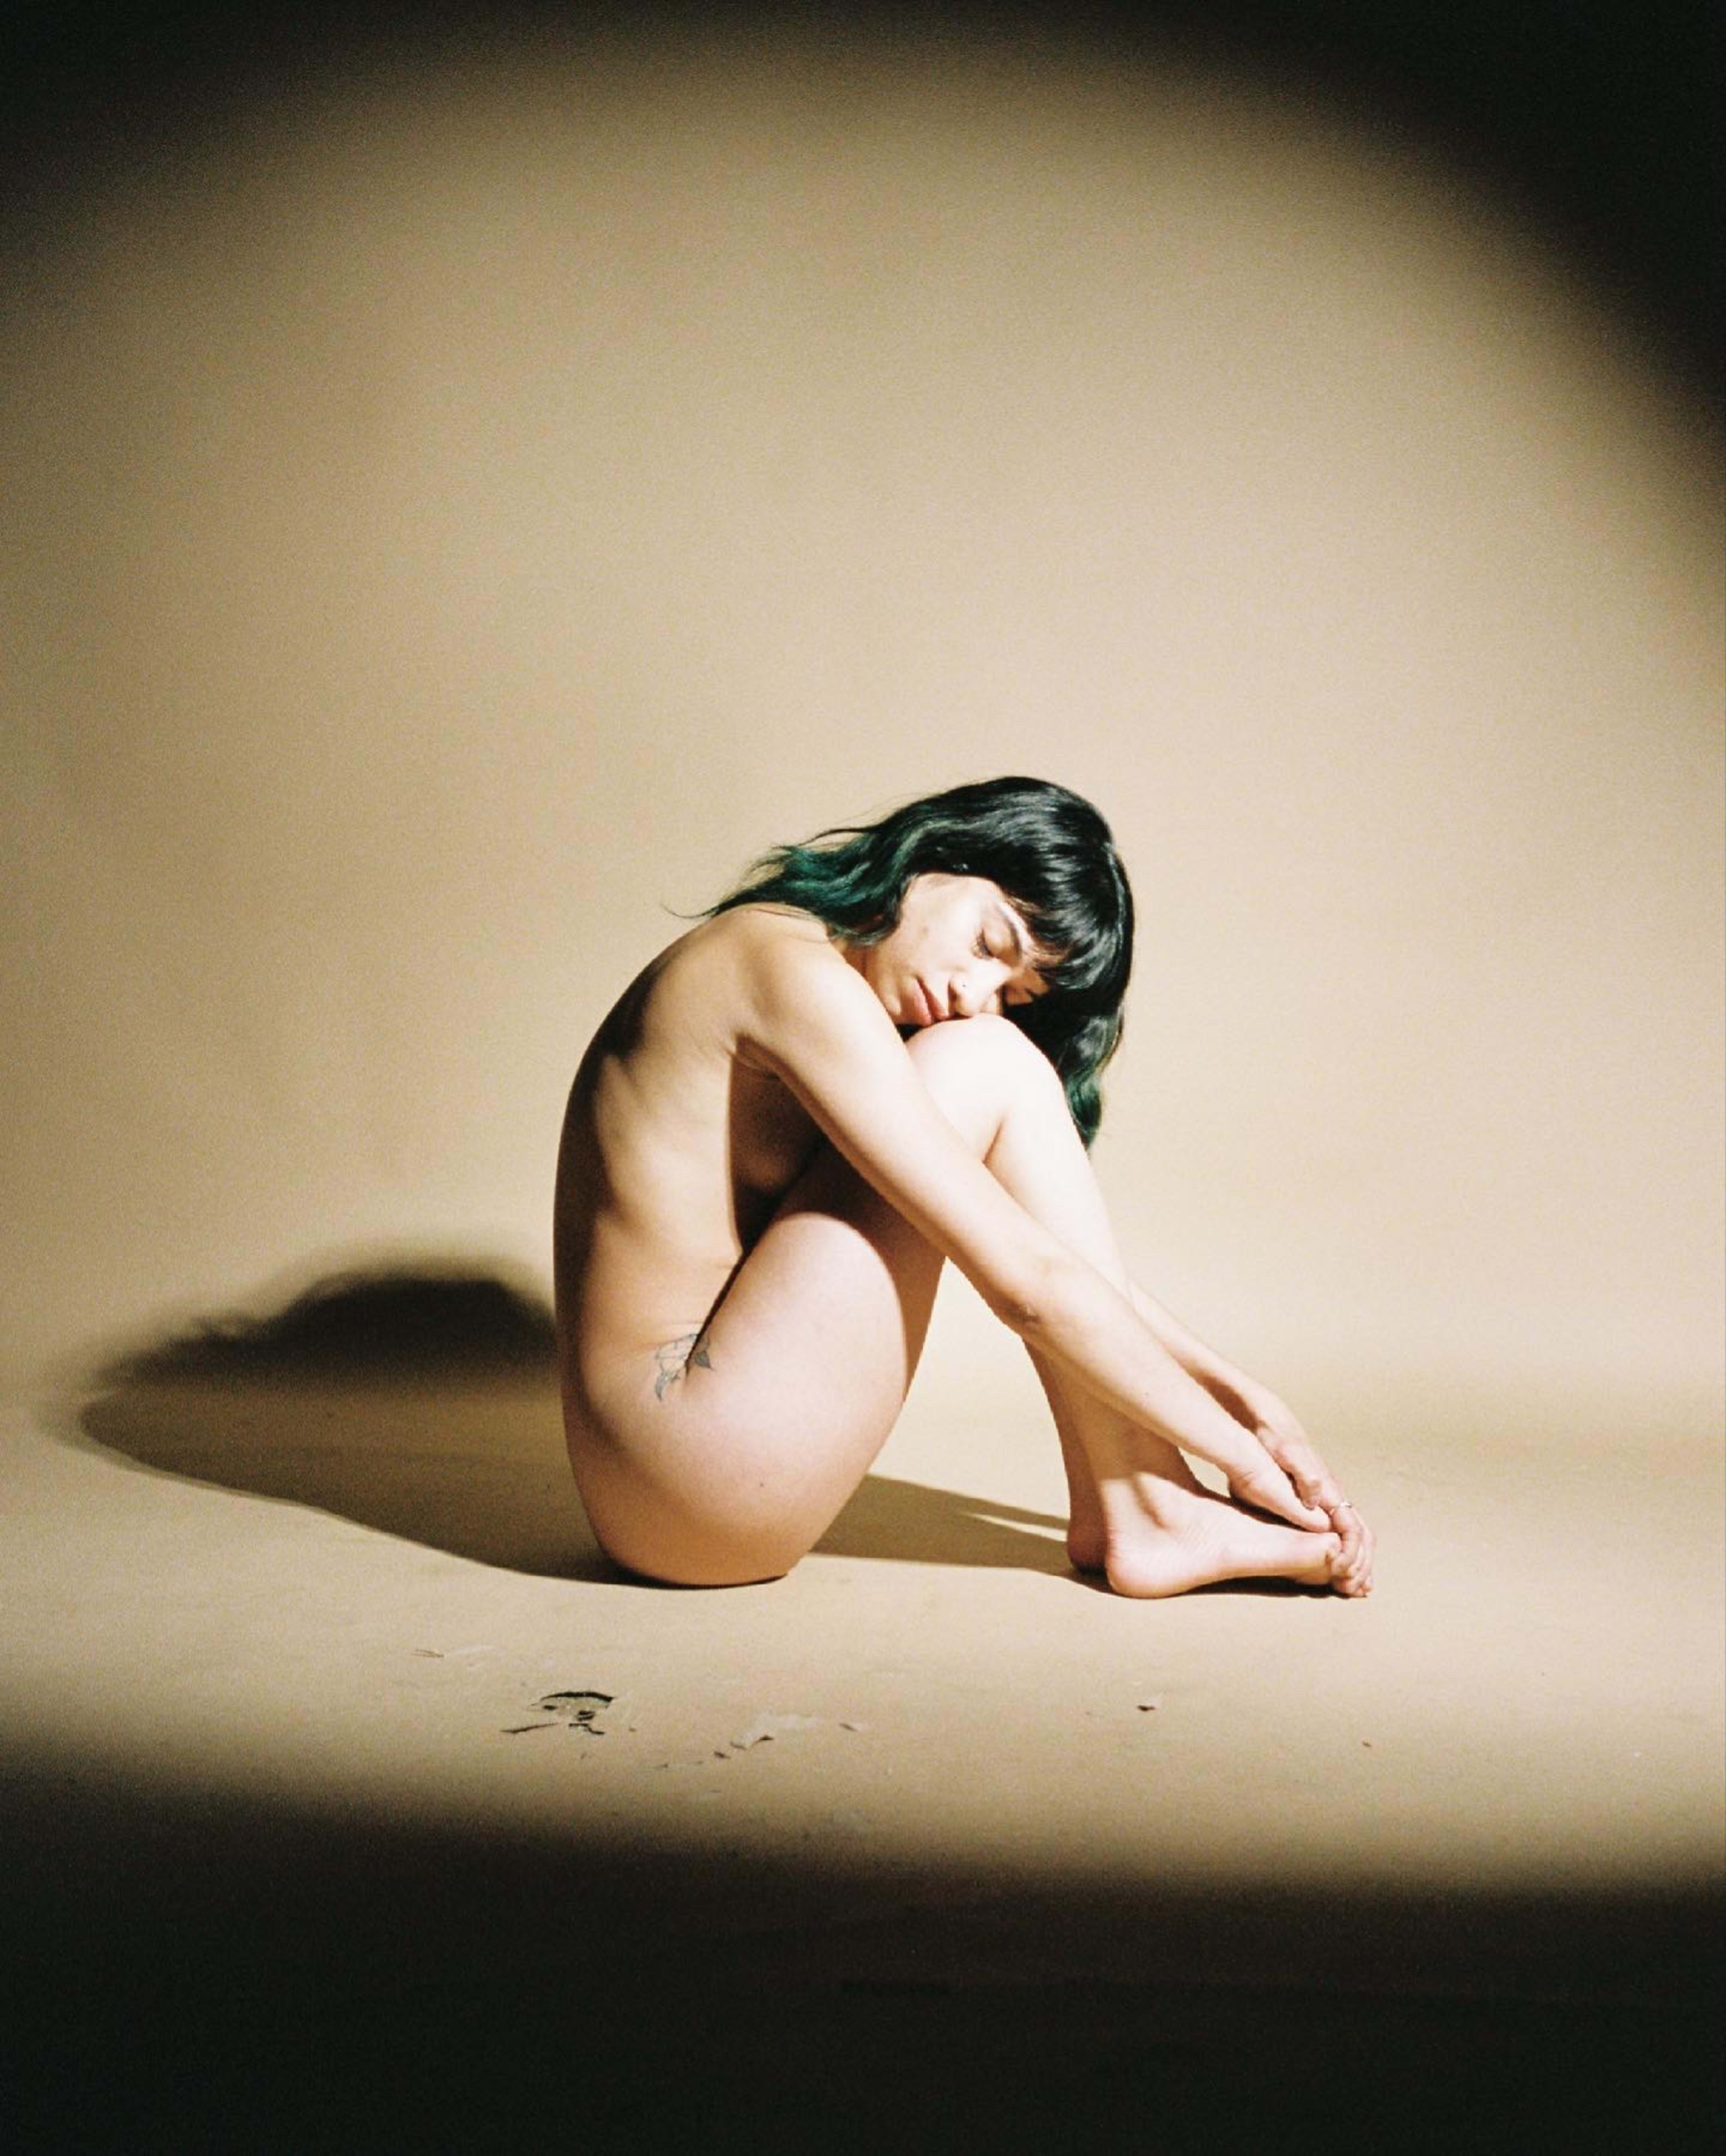 A minimalist boudoir photoshoot featuring a nude woman sitting cross-legged on the ground.